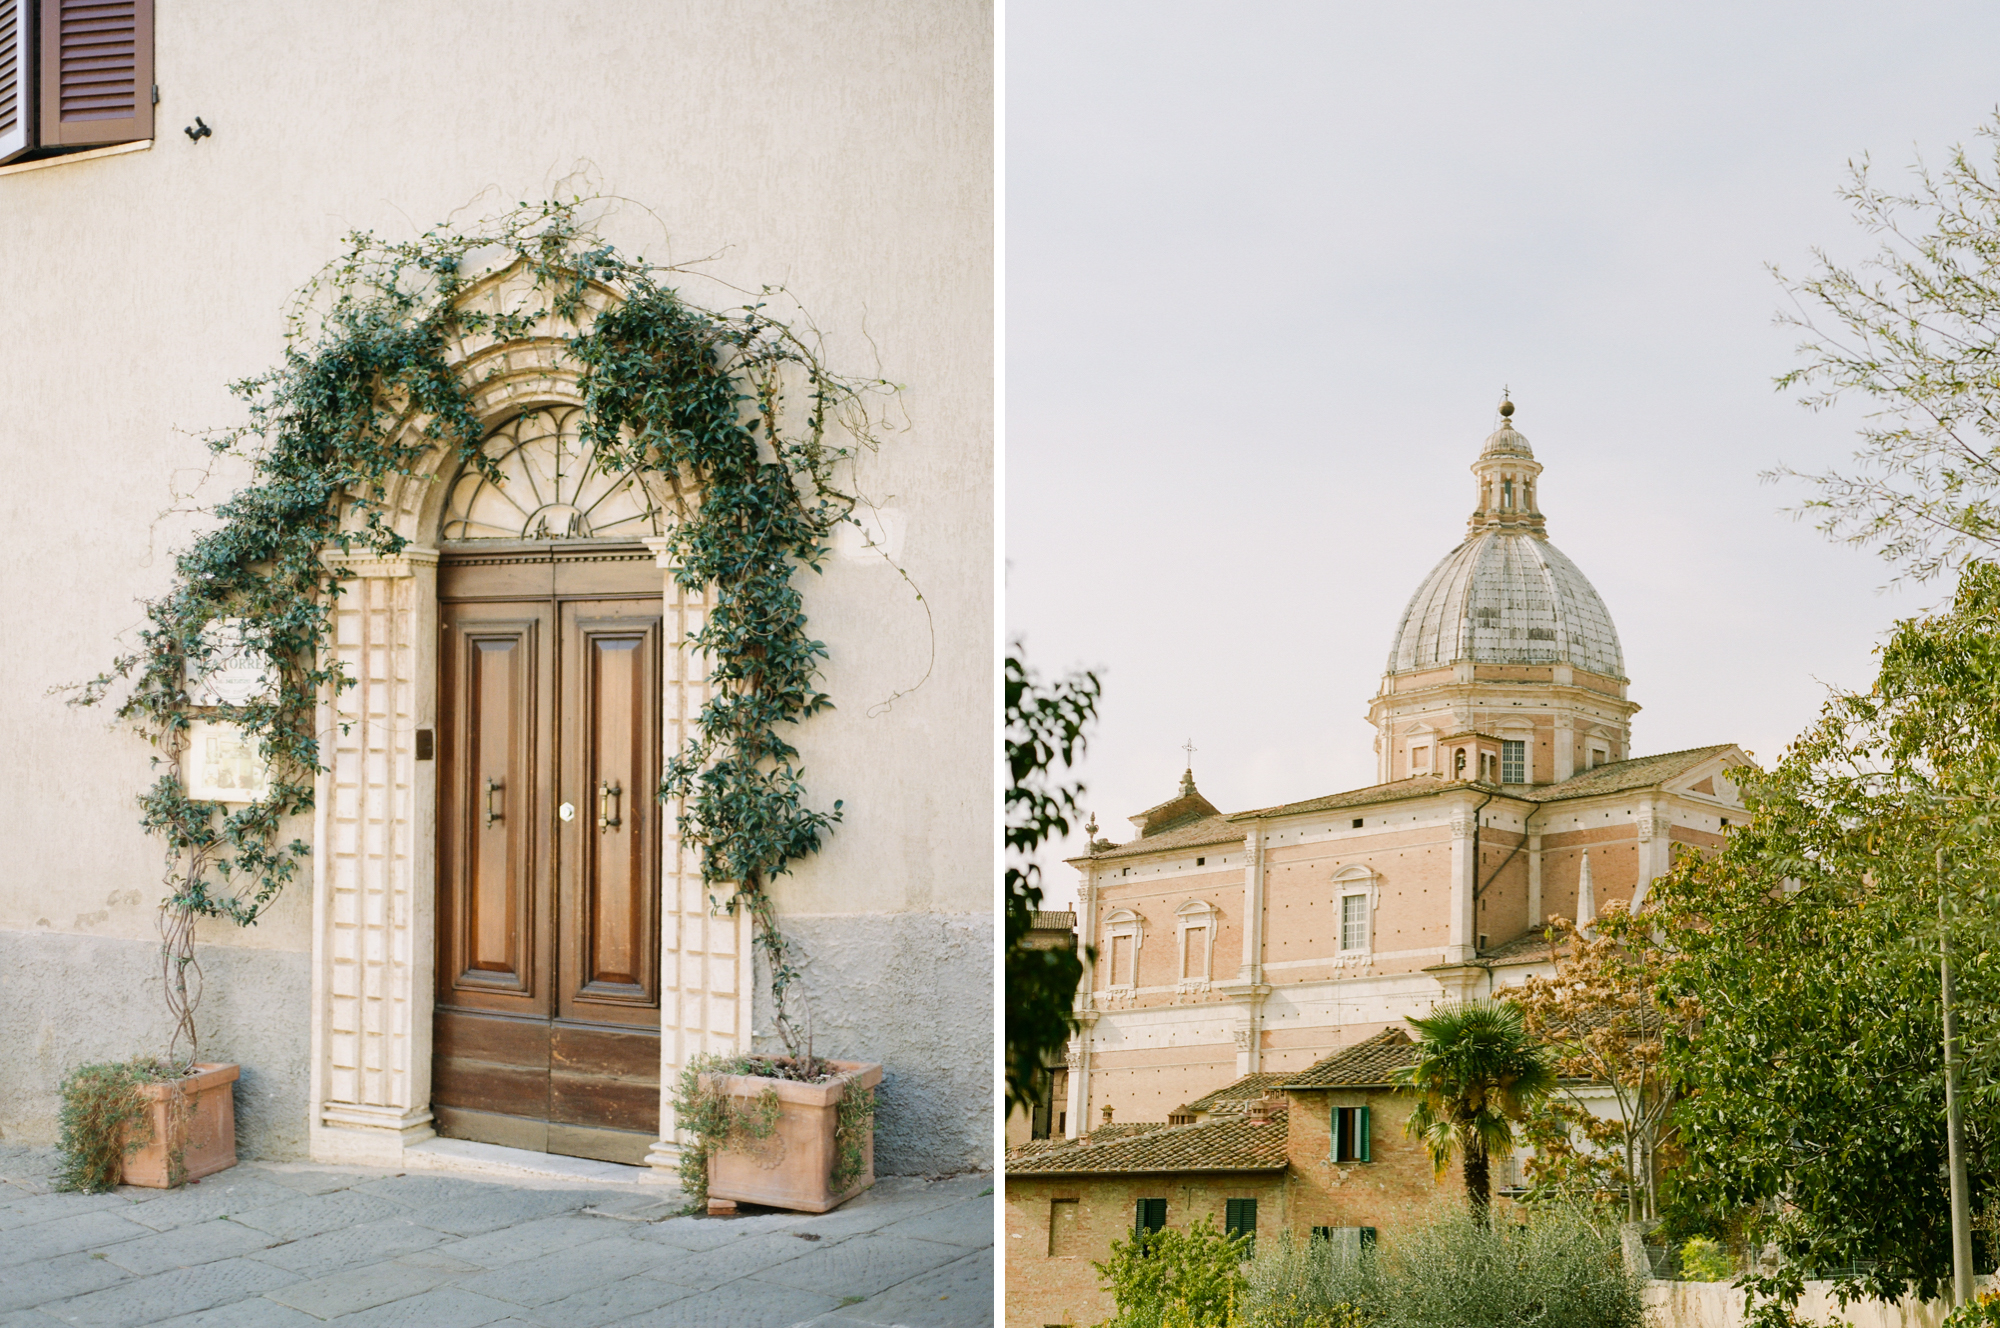 Sienna, Italy. Photo by Rachel Havel